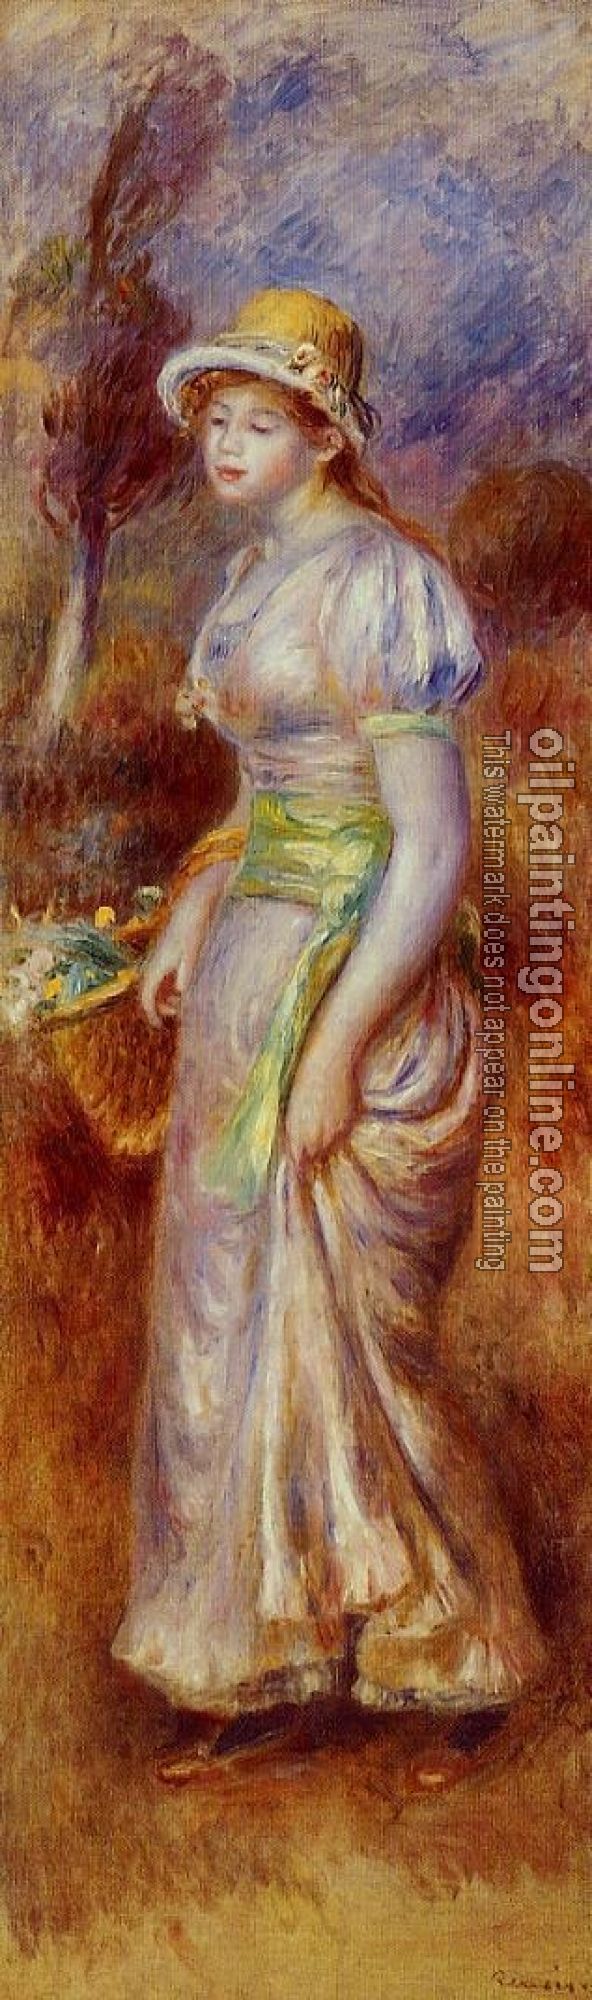 Renoir, Pierre Auguste - Woman with a Basket of Flowers